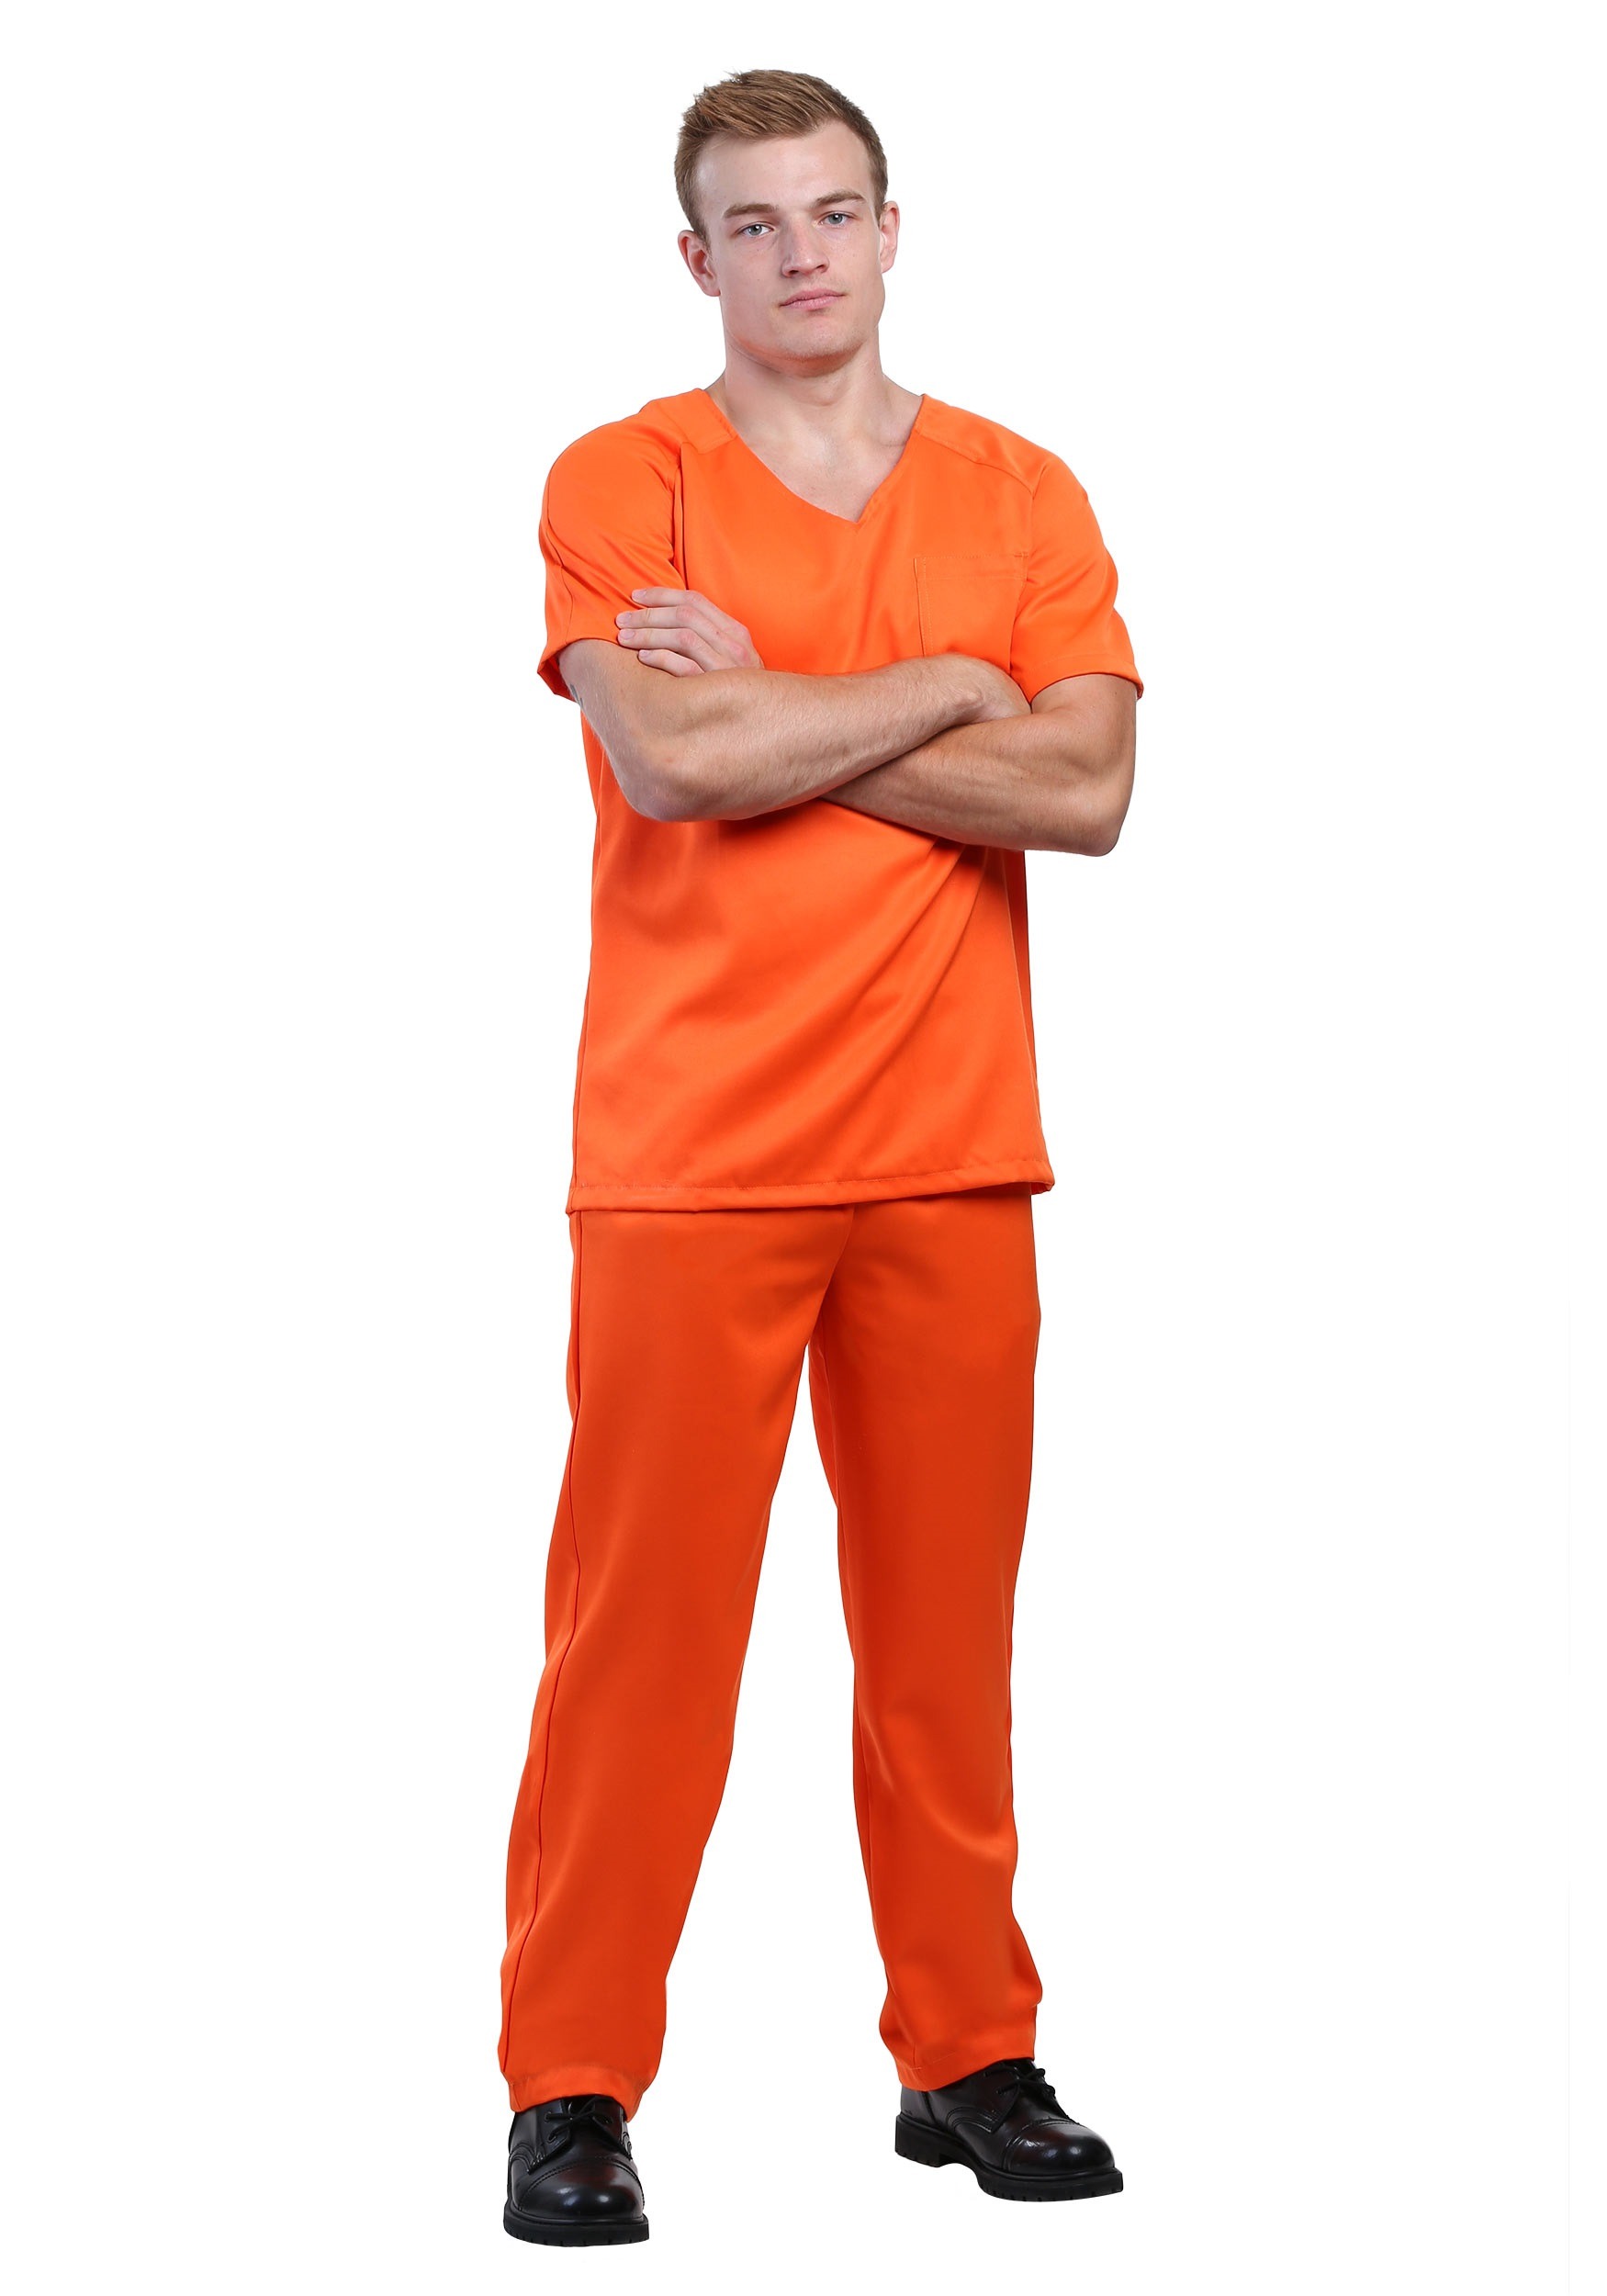 Men's Orange Prisoner Fancy Dress Costume